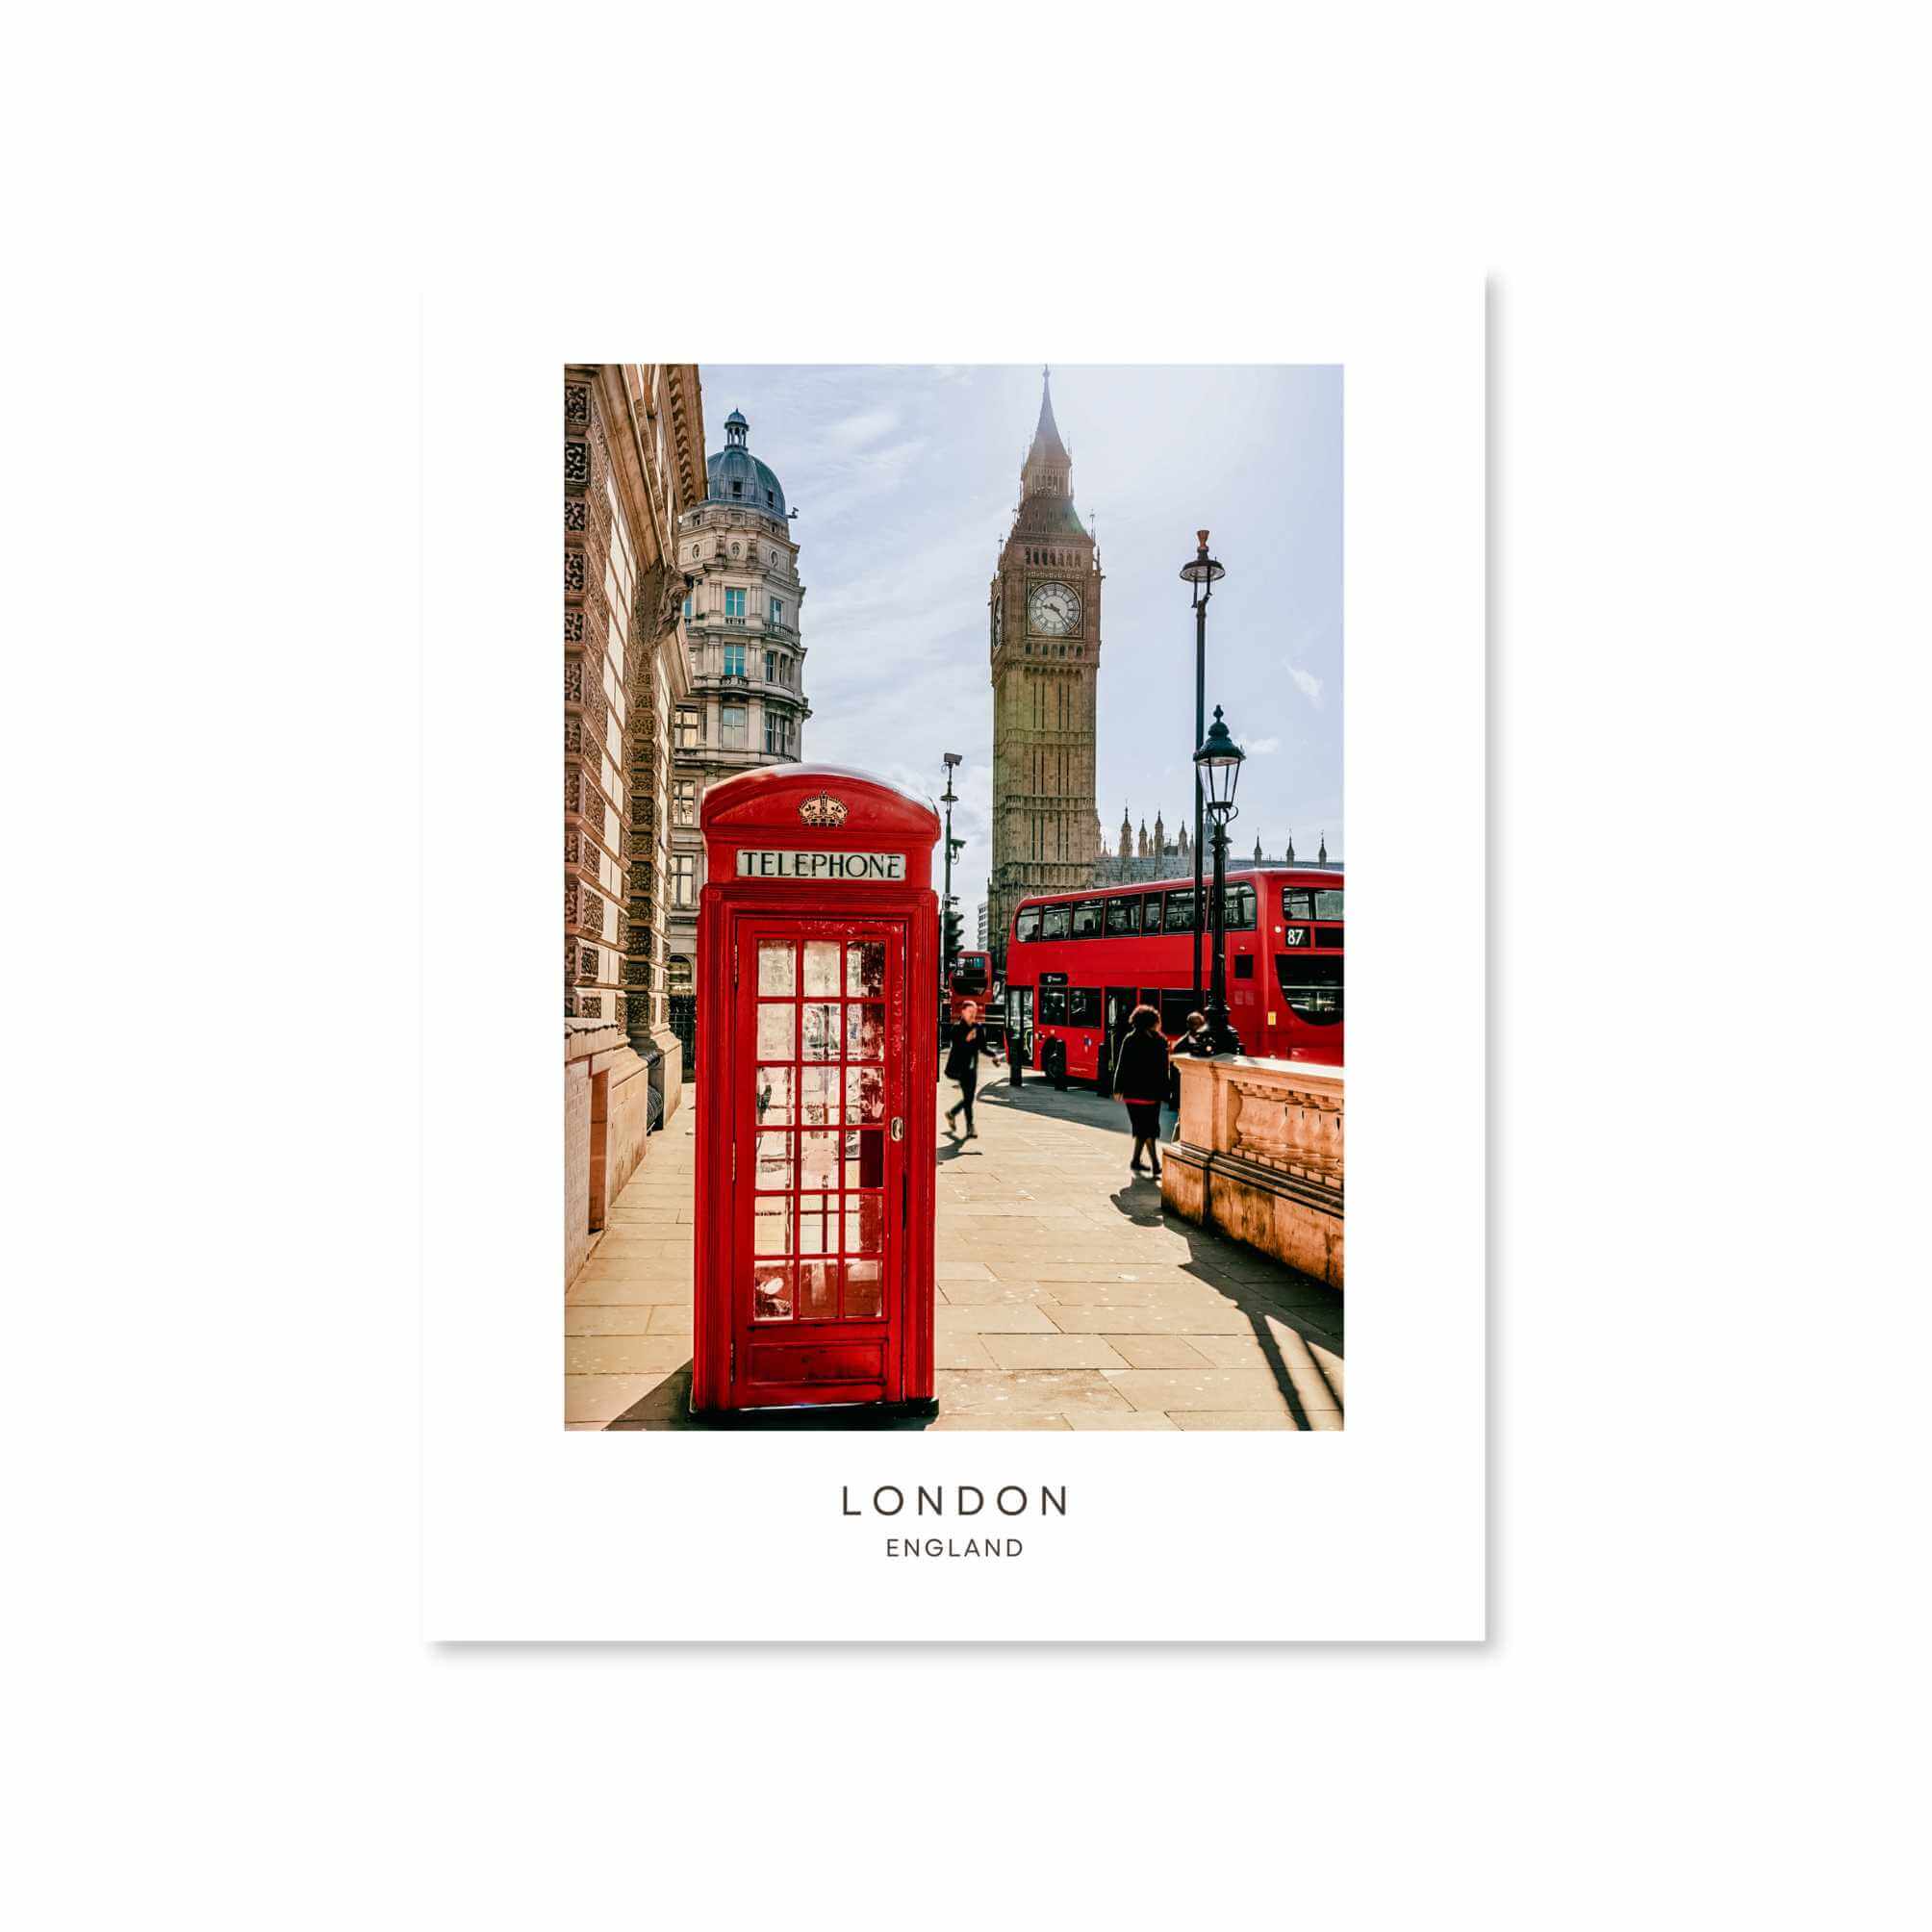 London Phone Booth Postcard